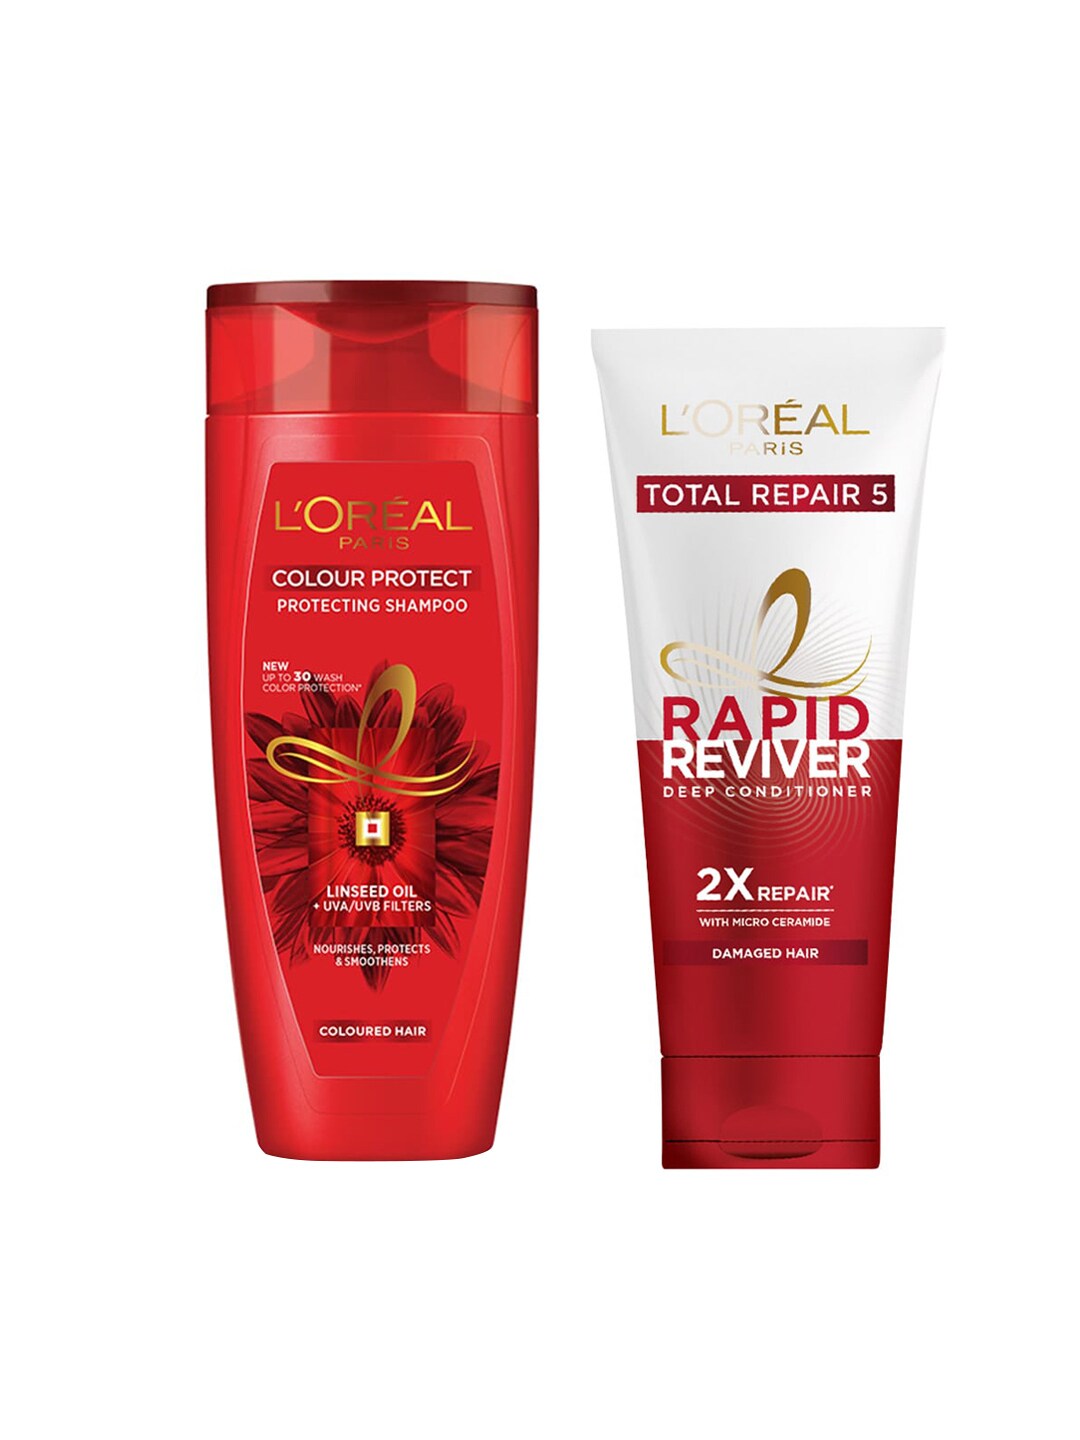 Loreal Paris Set of Colour Protect Shampoo & Rapid Reviver Total Repair 5 Deep Conditioner Price in India